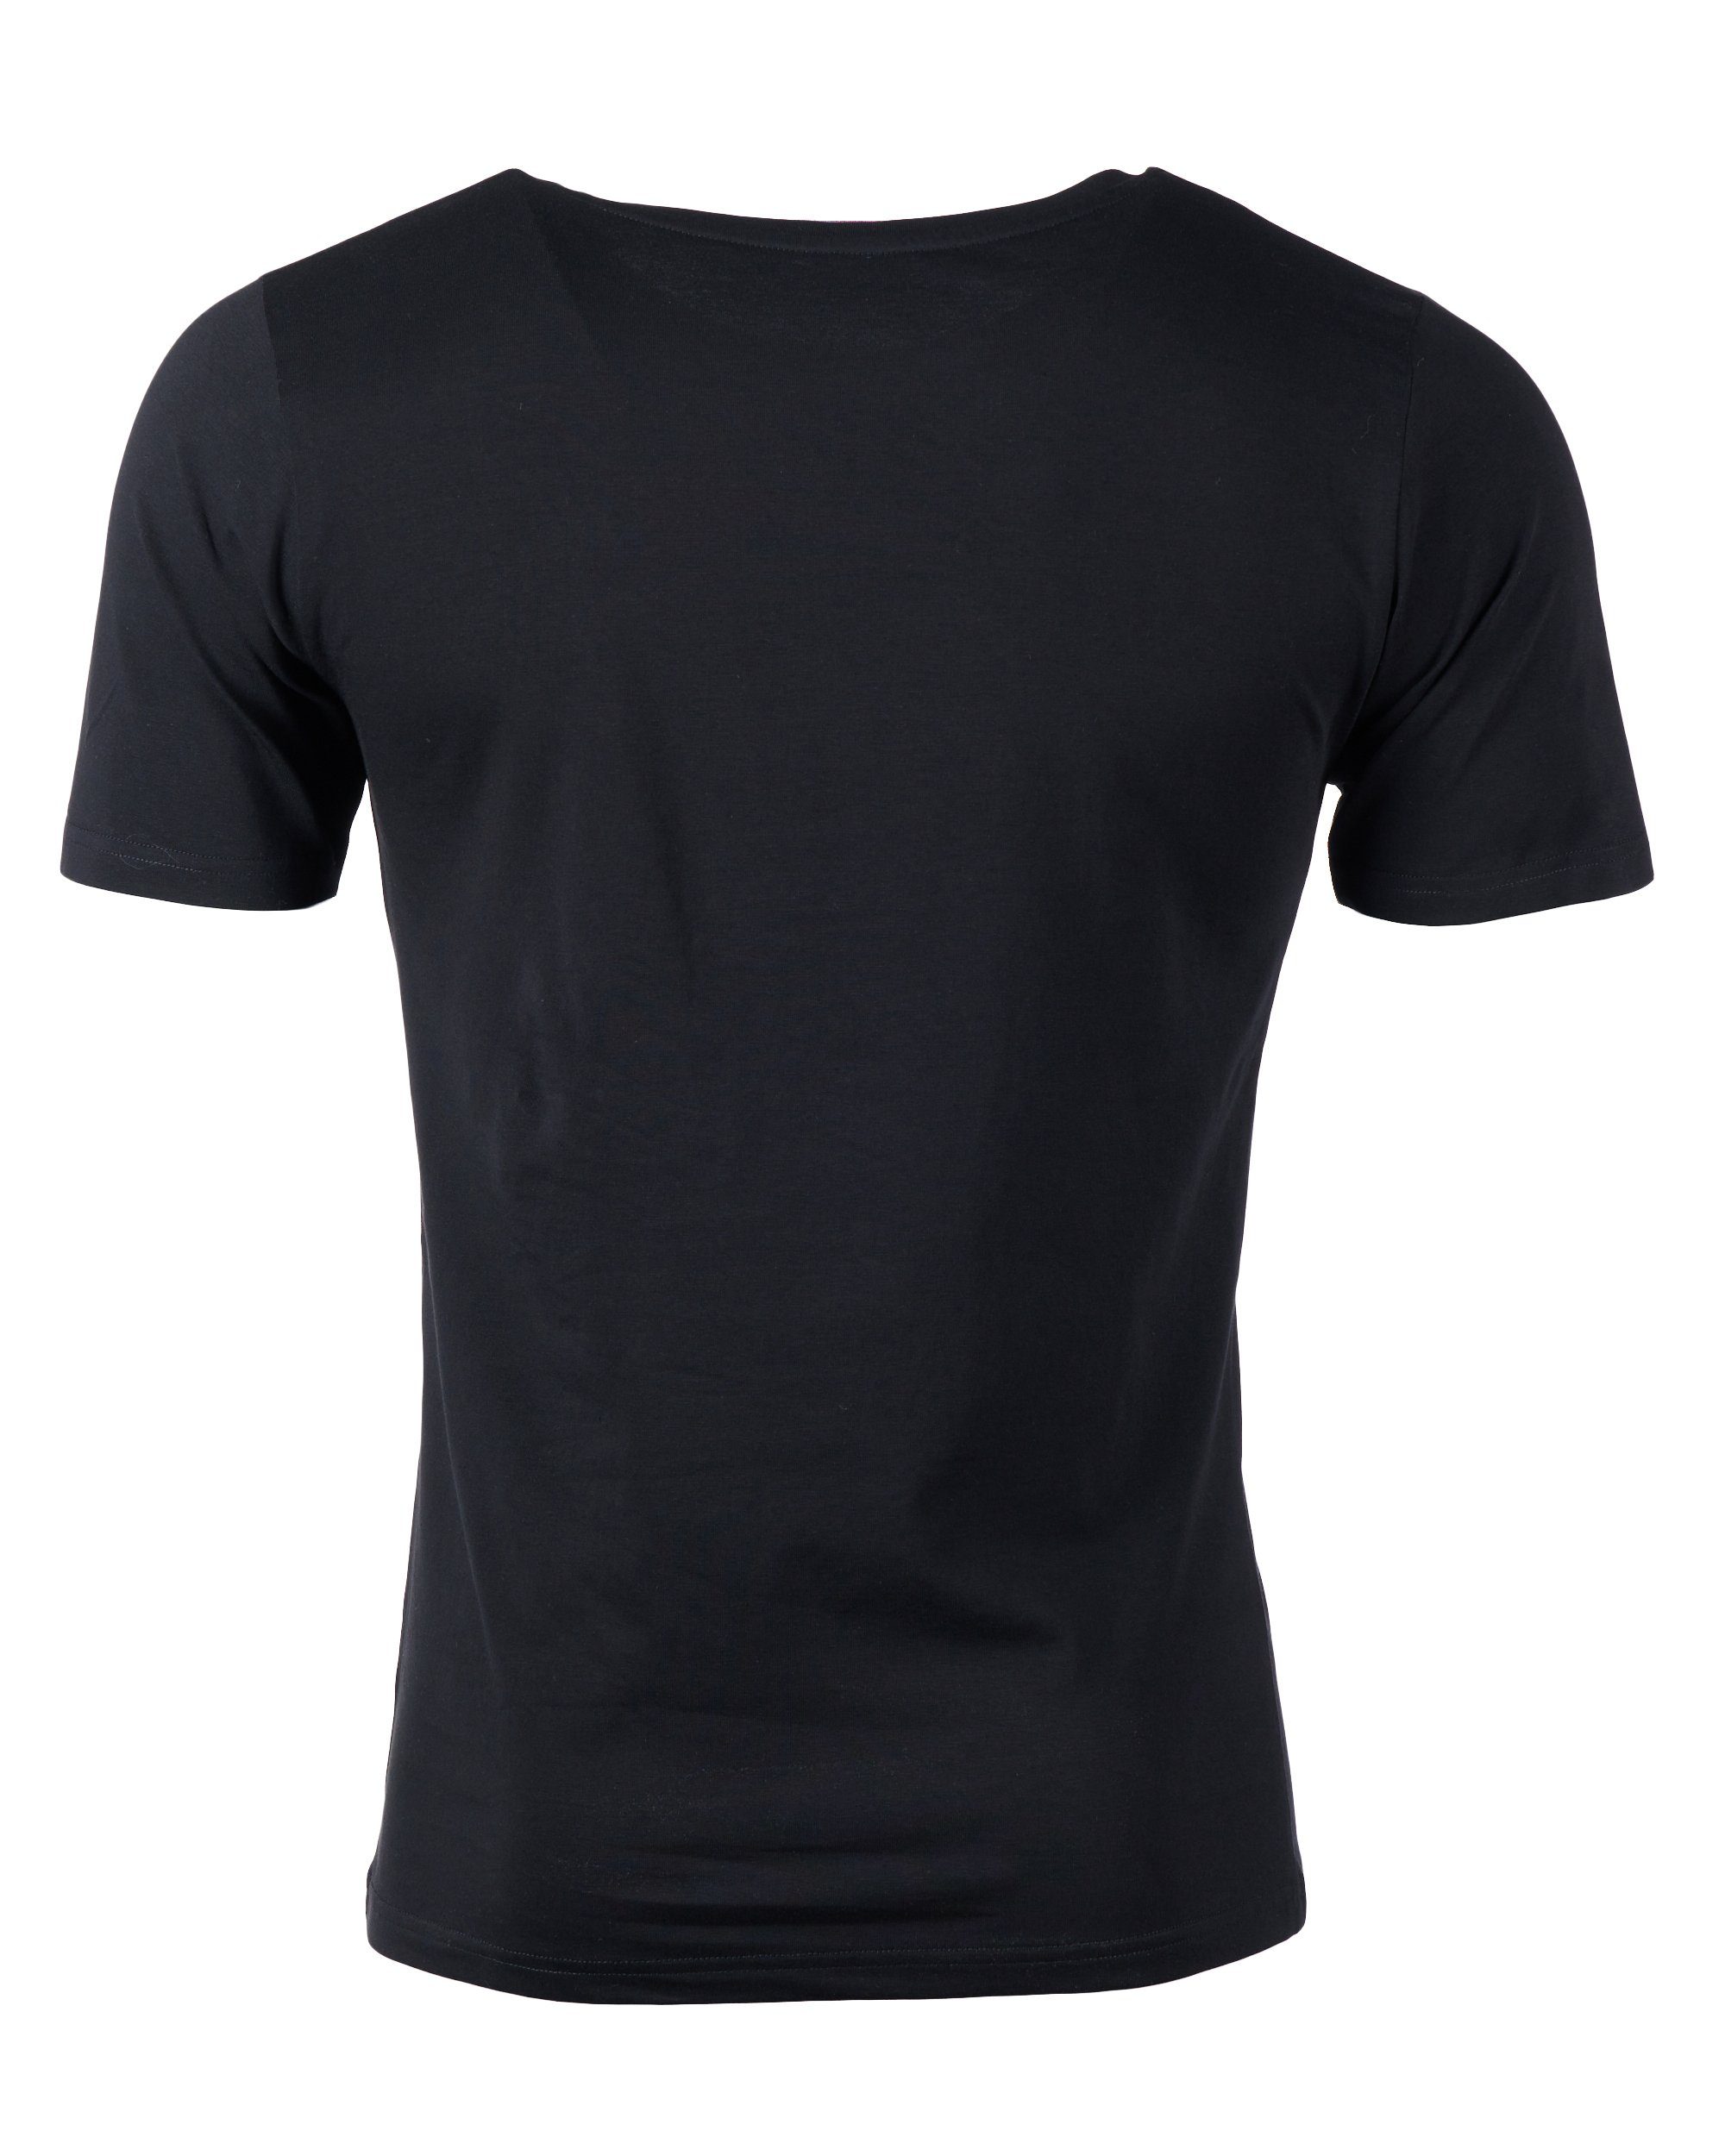 TOP GUN T-Shirt TGUW003 black